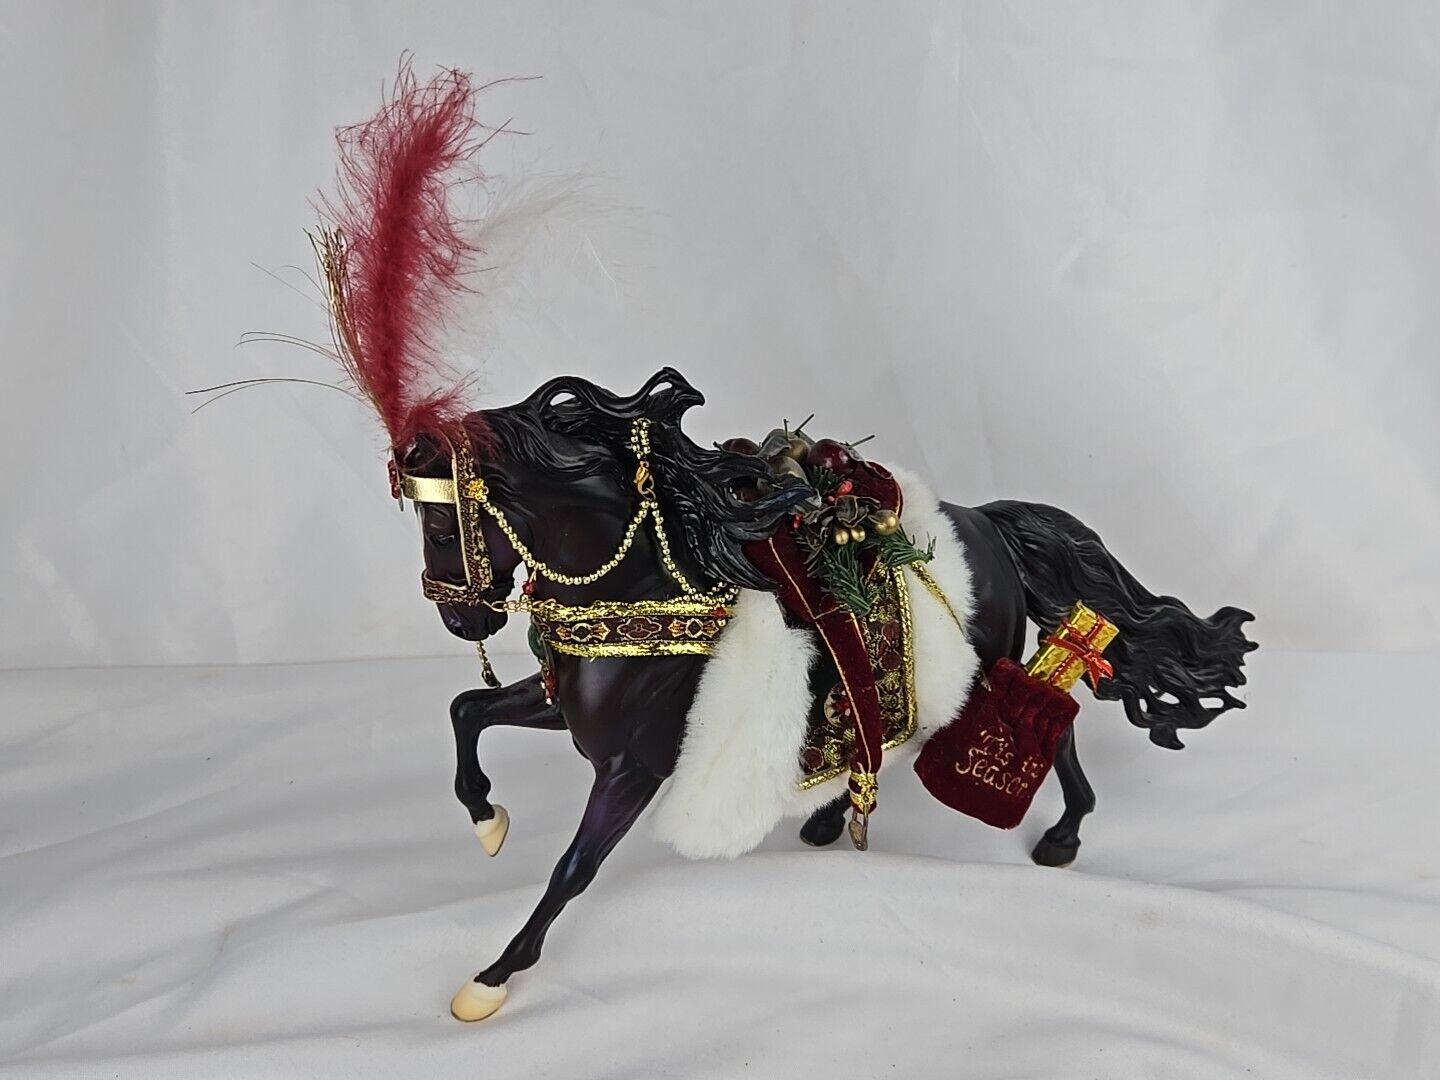 Breyer Seasons Greeting Christmas Horse 2005 “Tis The Season”.